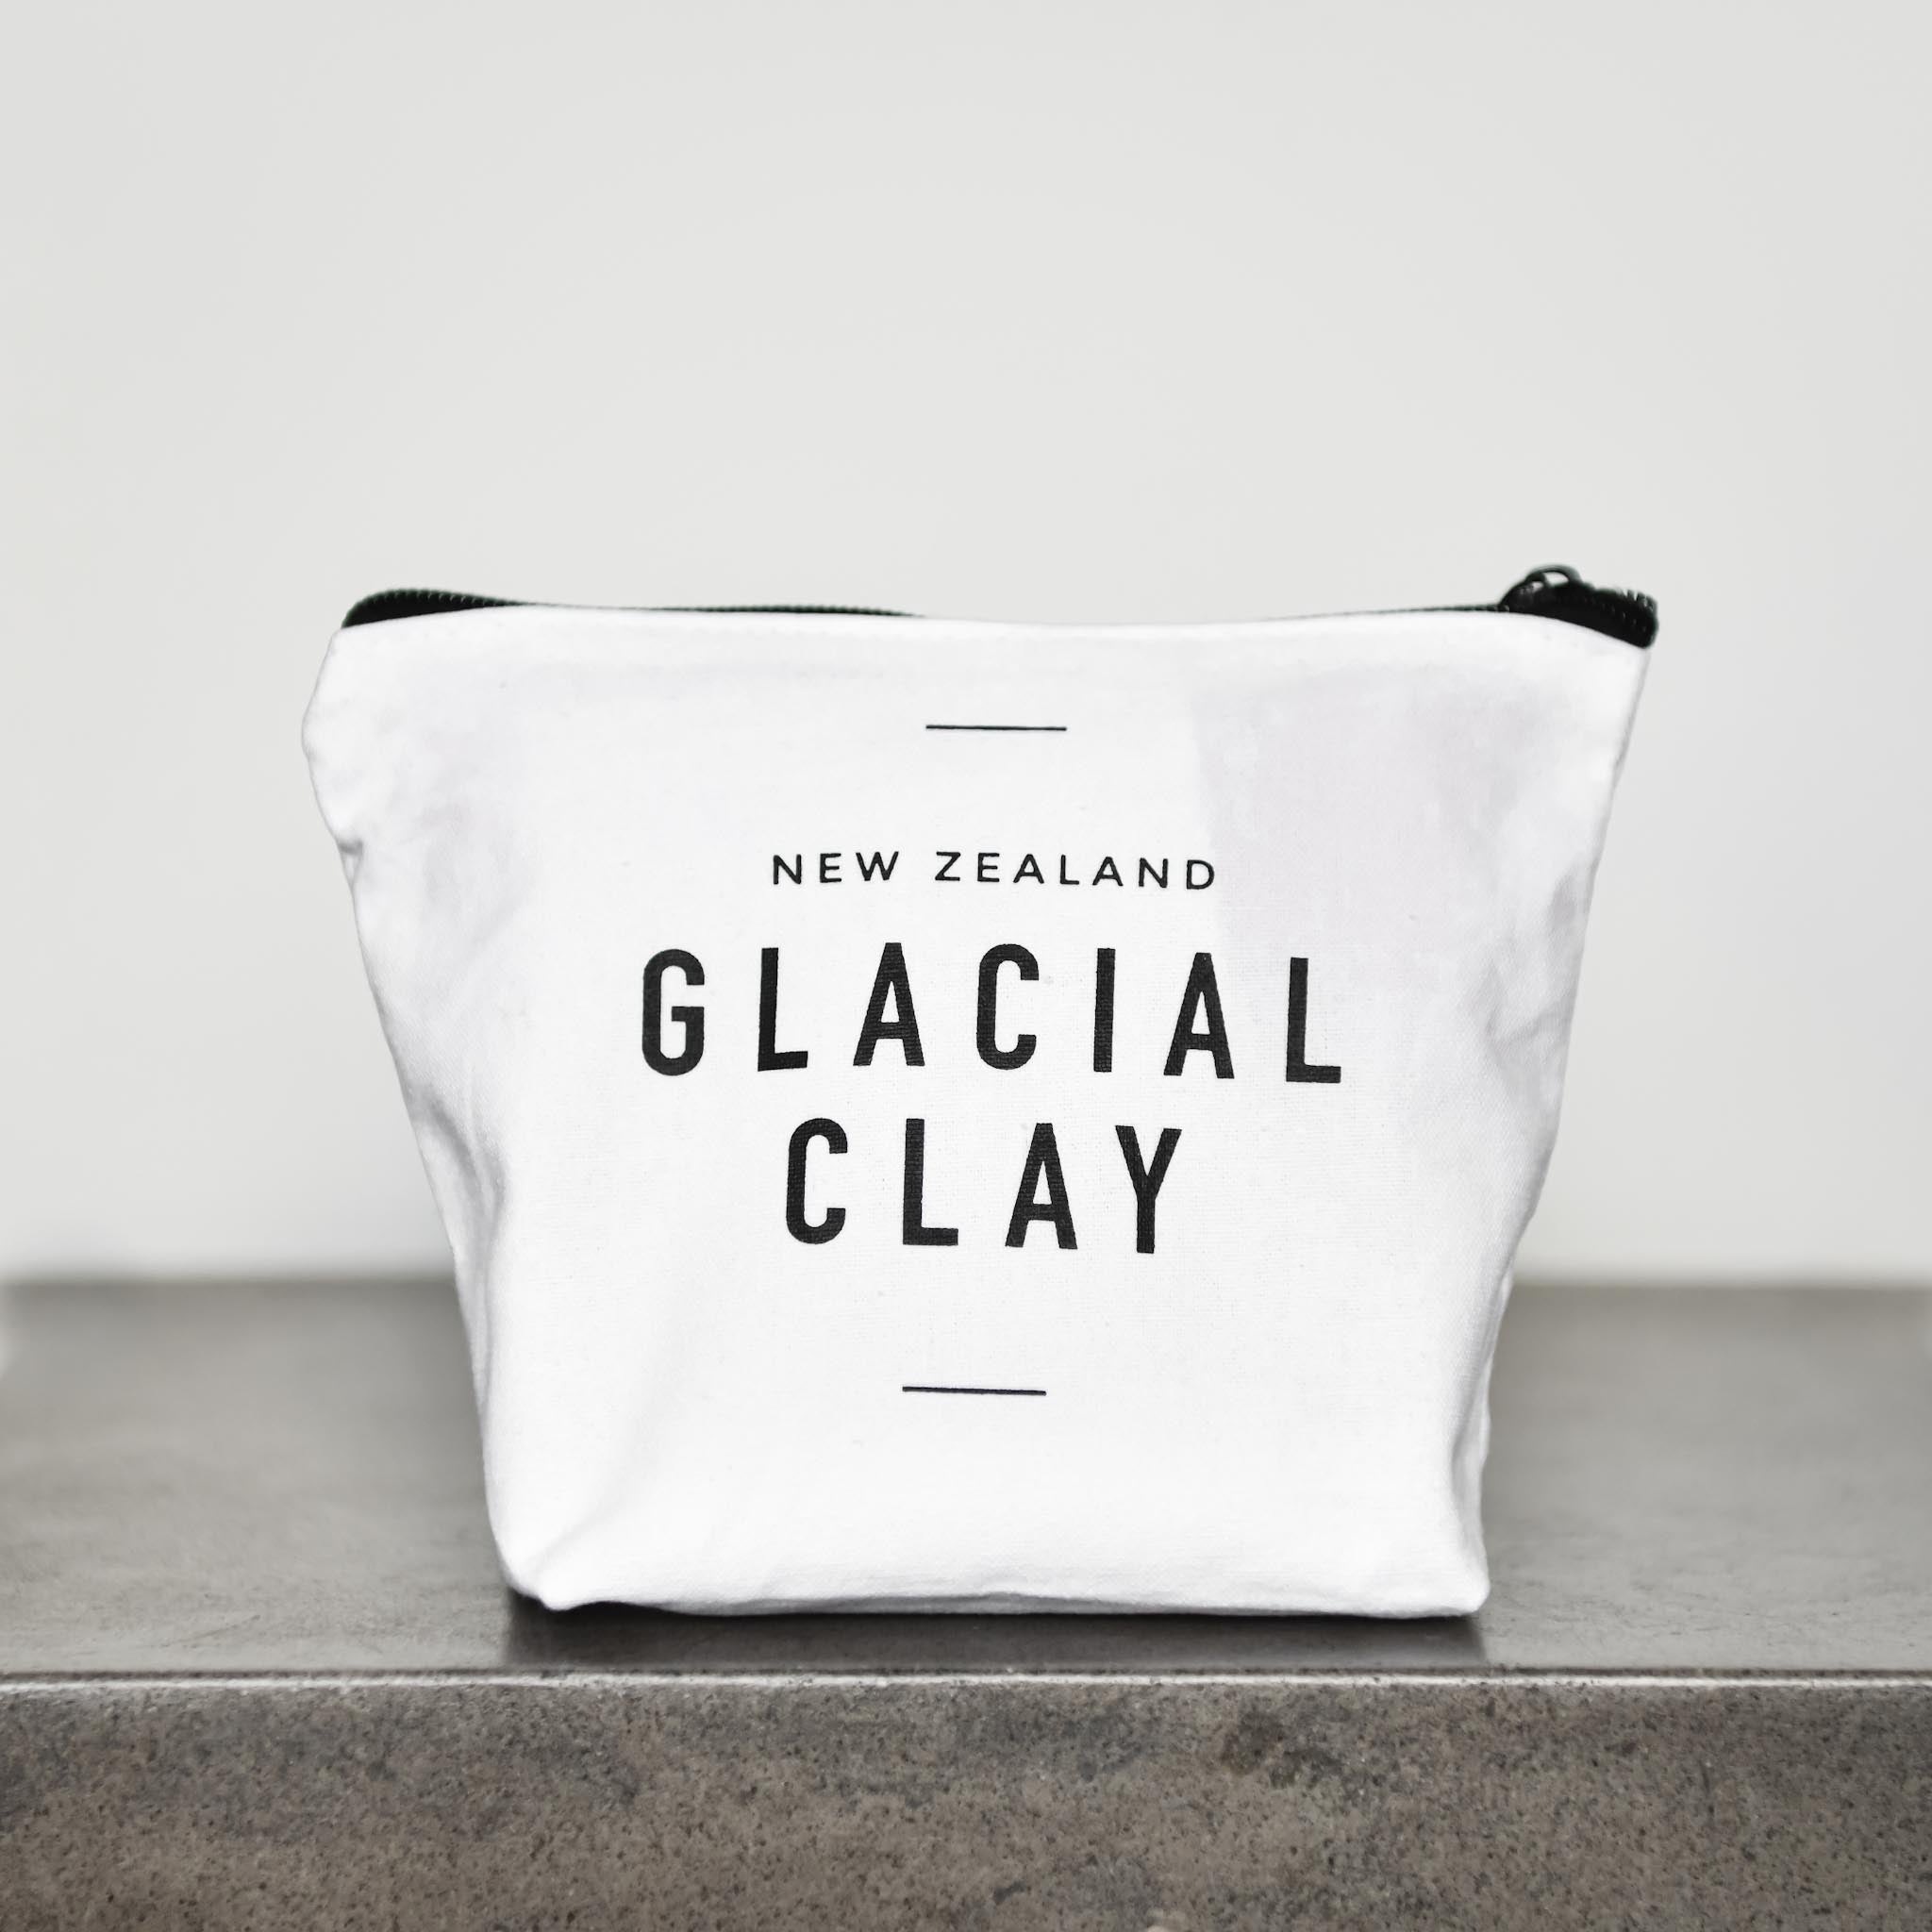 New Zealand glacial clay canvas bag